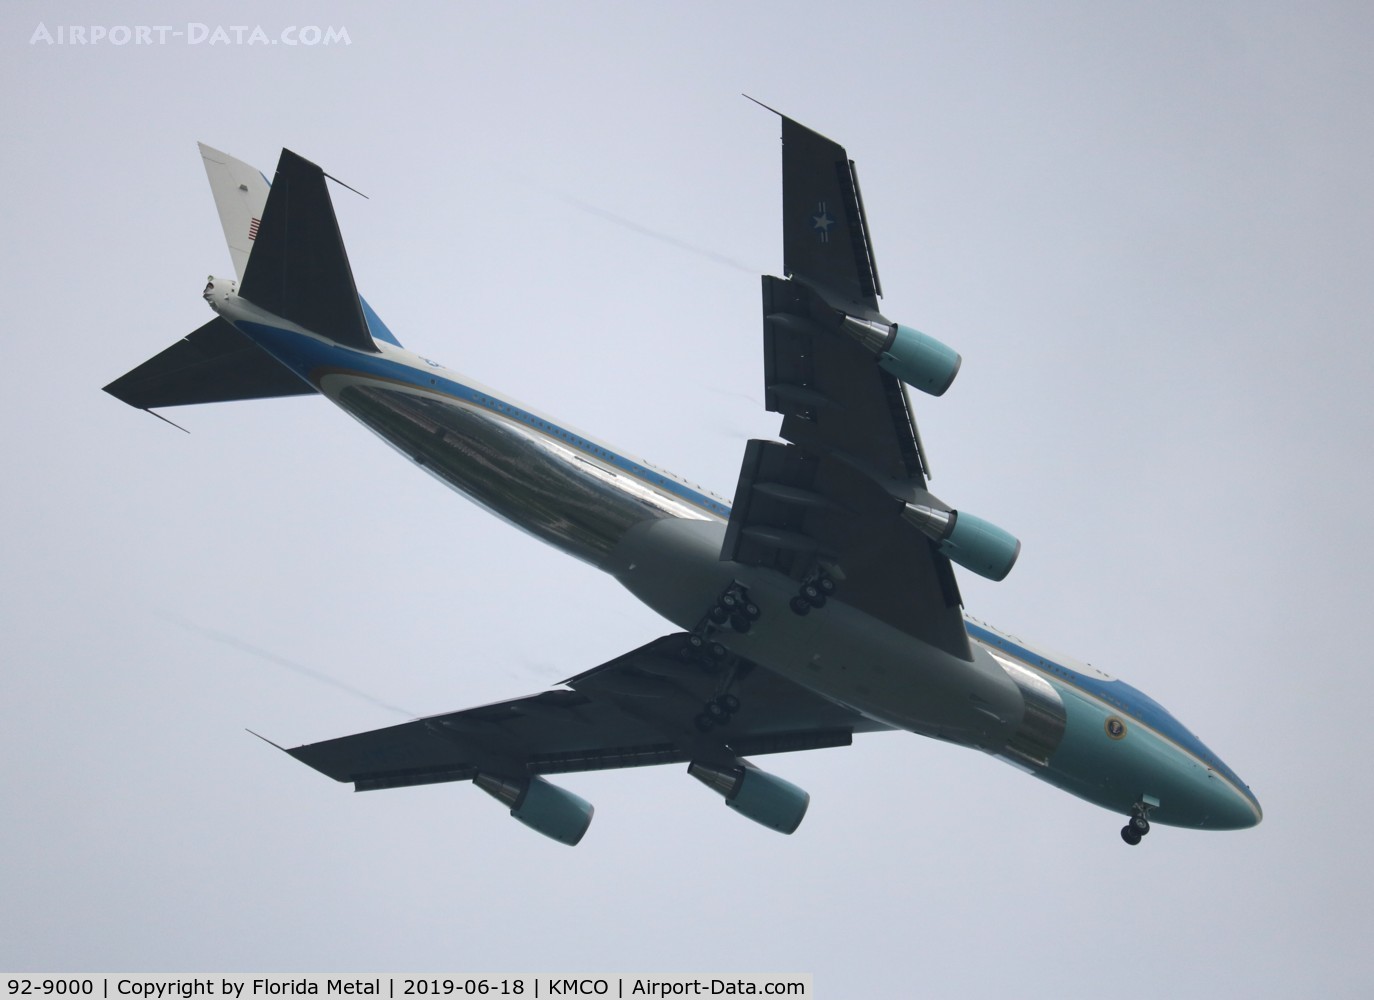 92-9000, 1987 Boeing VC-25A (747-2G4B) C/N 23825, MCO spotting